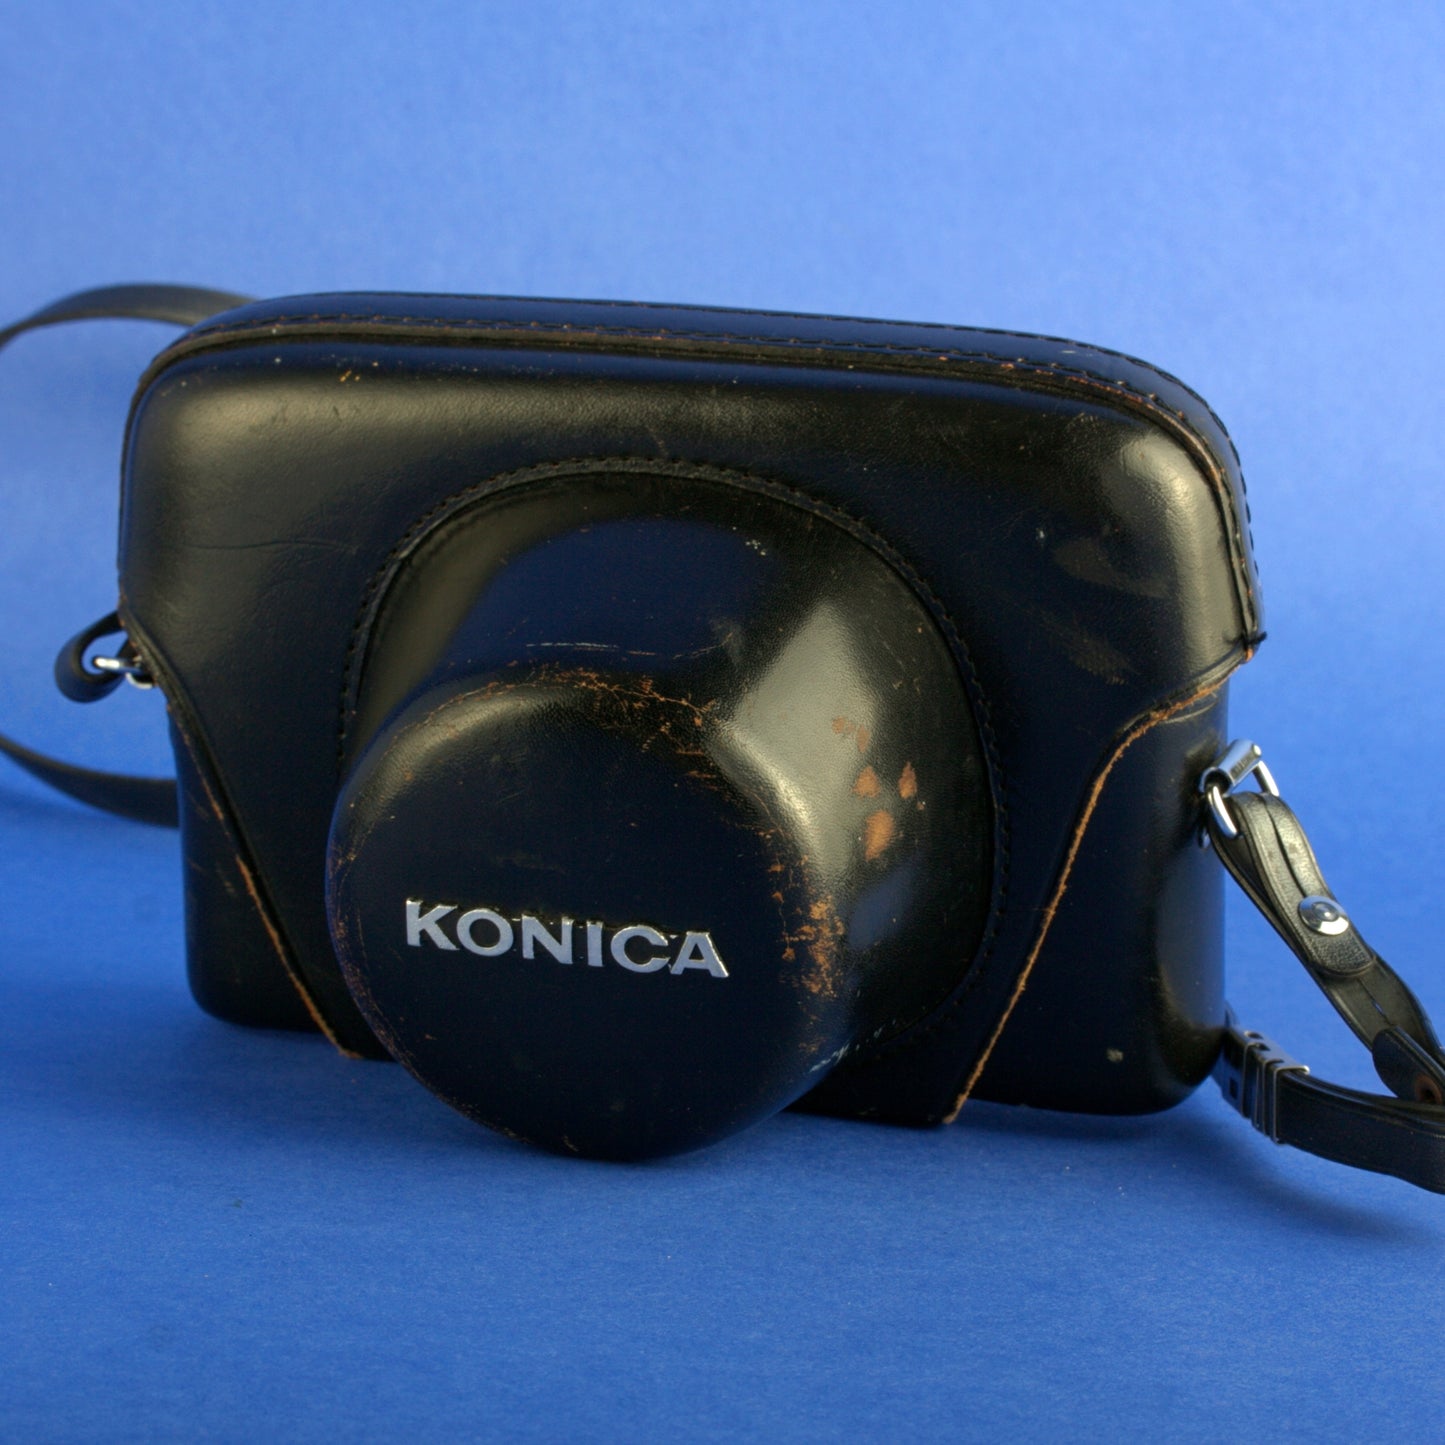 Konica S1.6 Film Camera Not Working